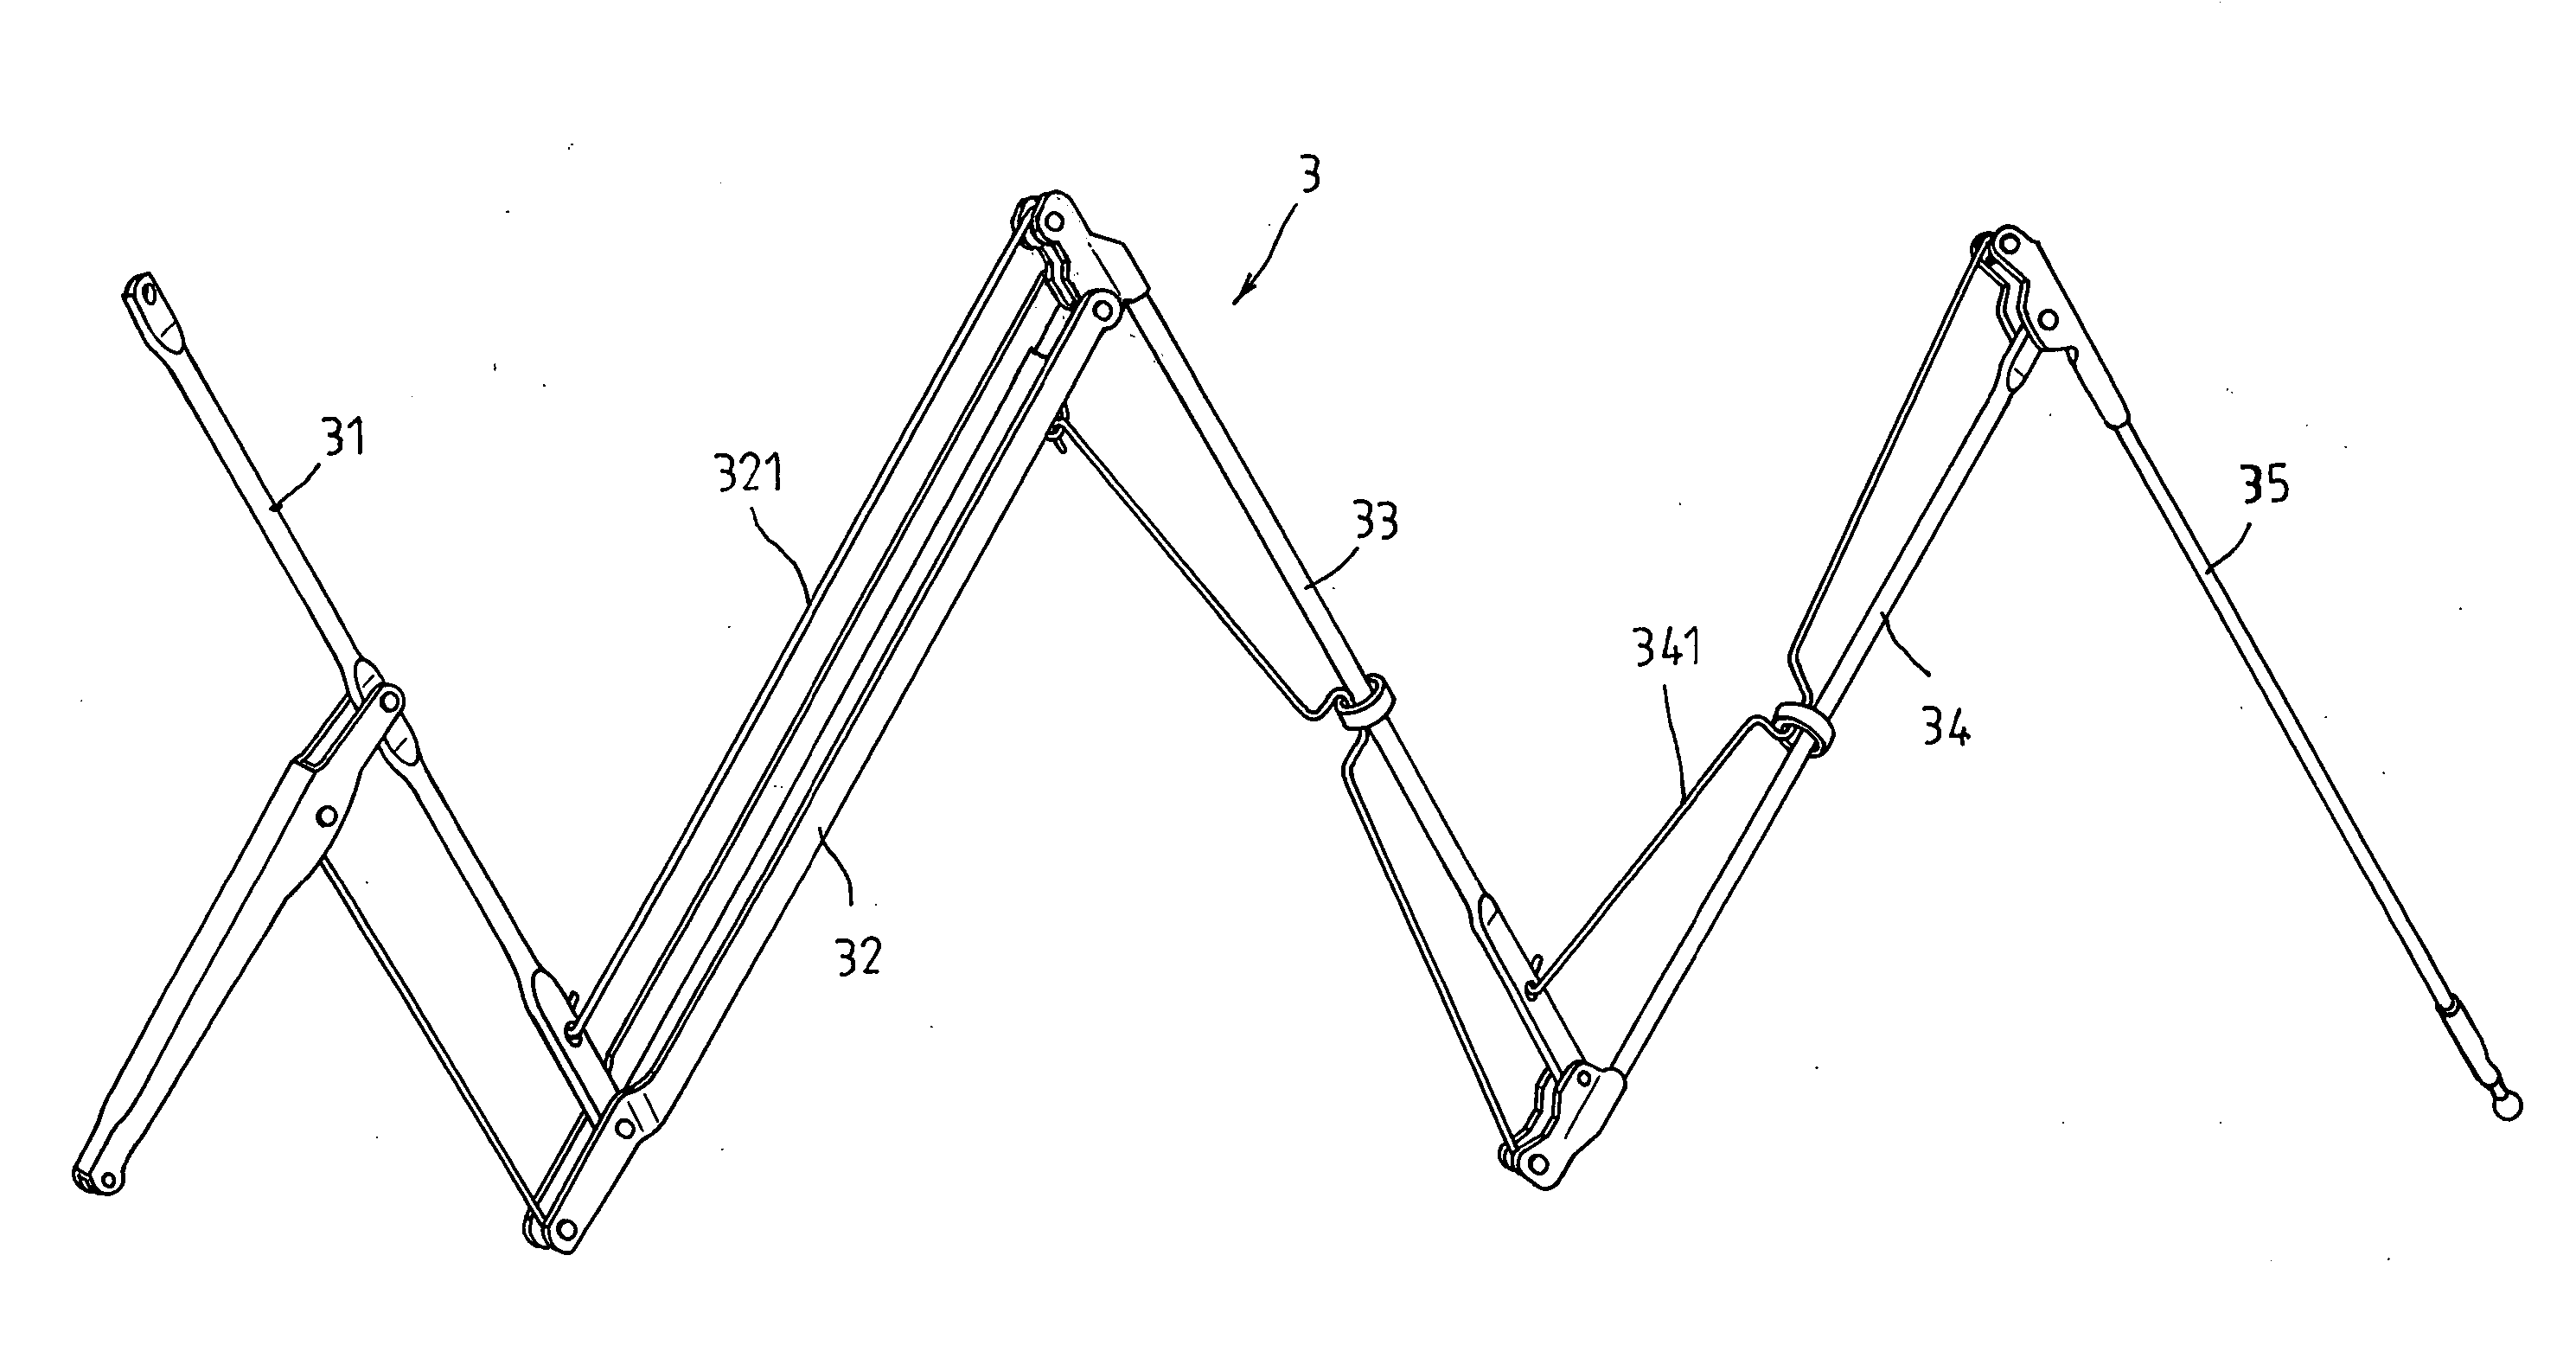 Foldable umbrella frame having five ribs (II)